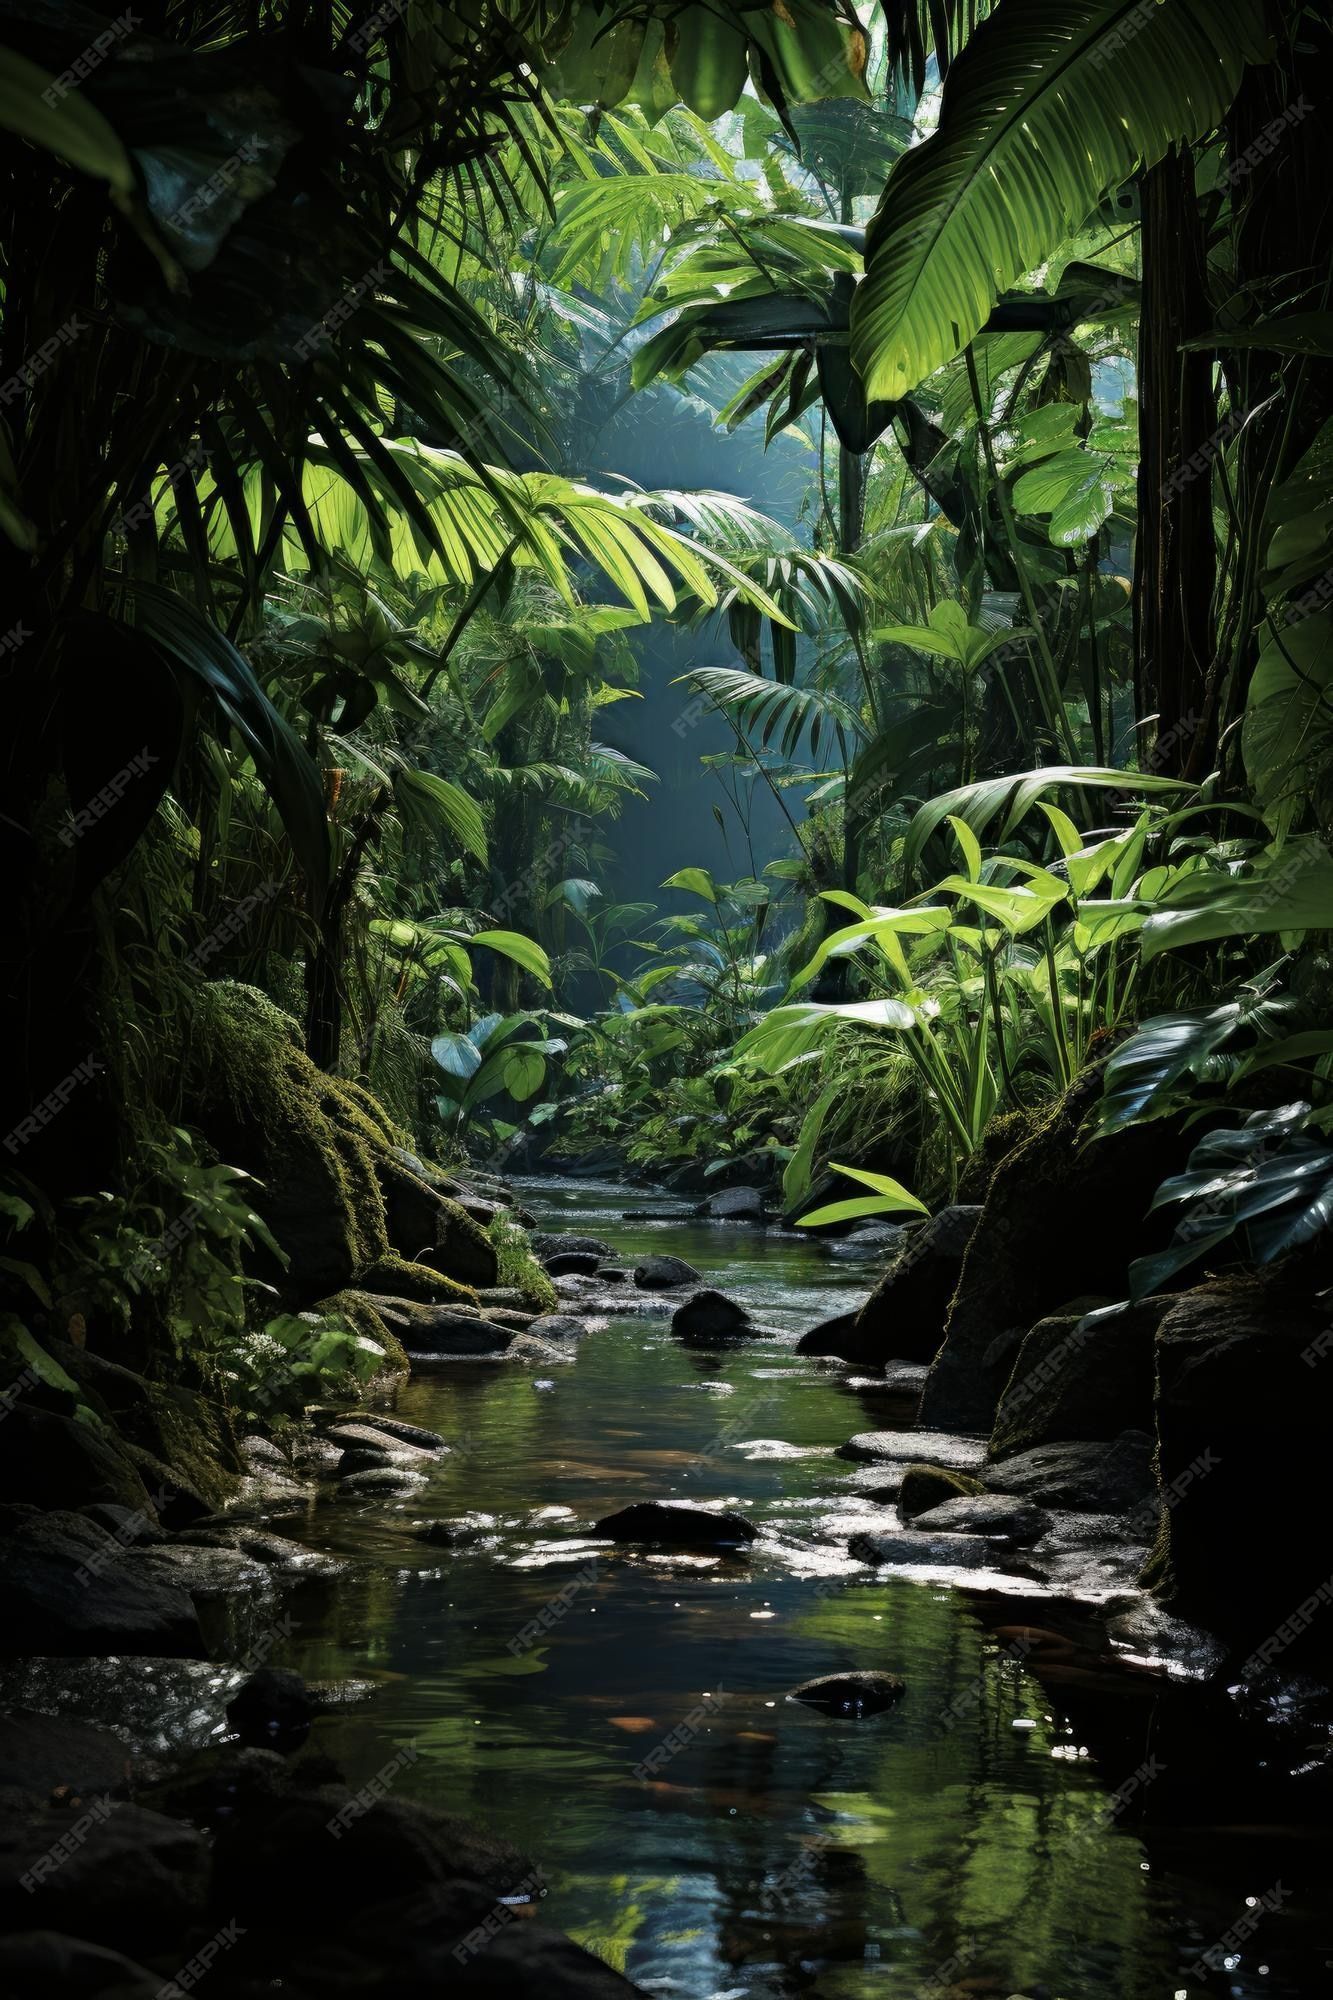 Lush Jungle Image